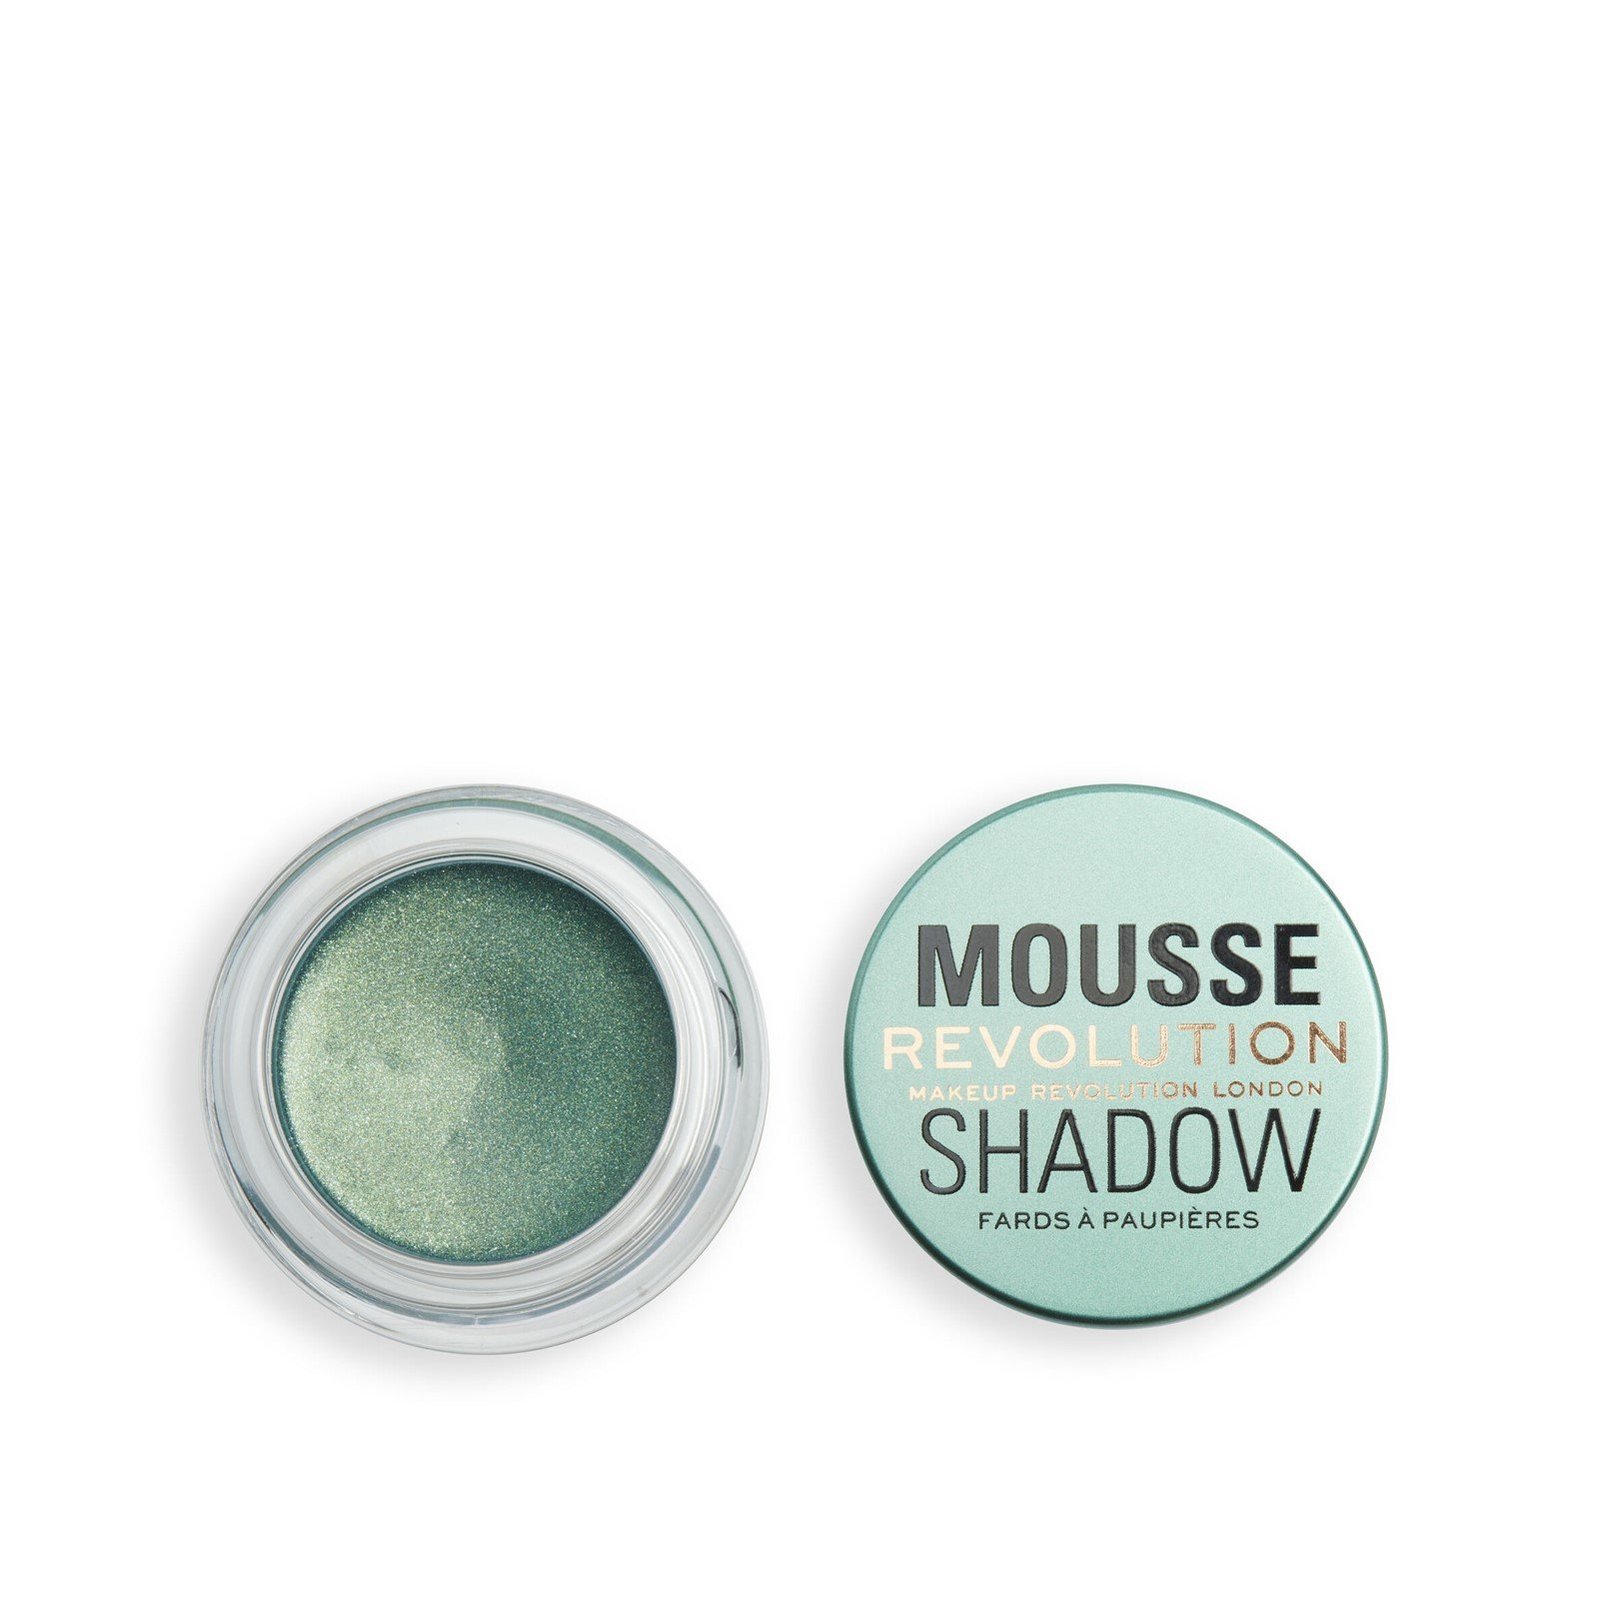 Makeup Revolution Mousse Shadow Emerald Green 4g (0.14 oz)